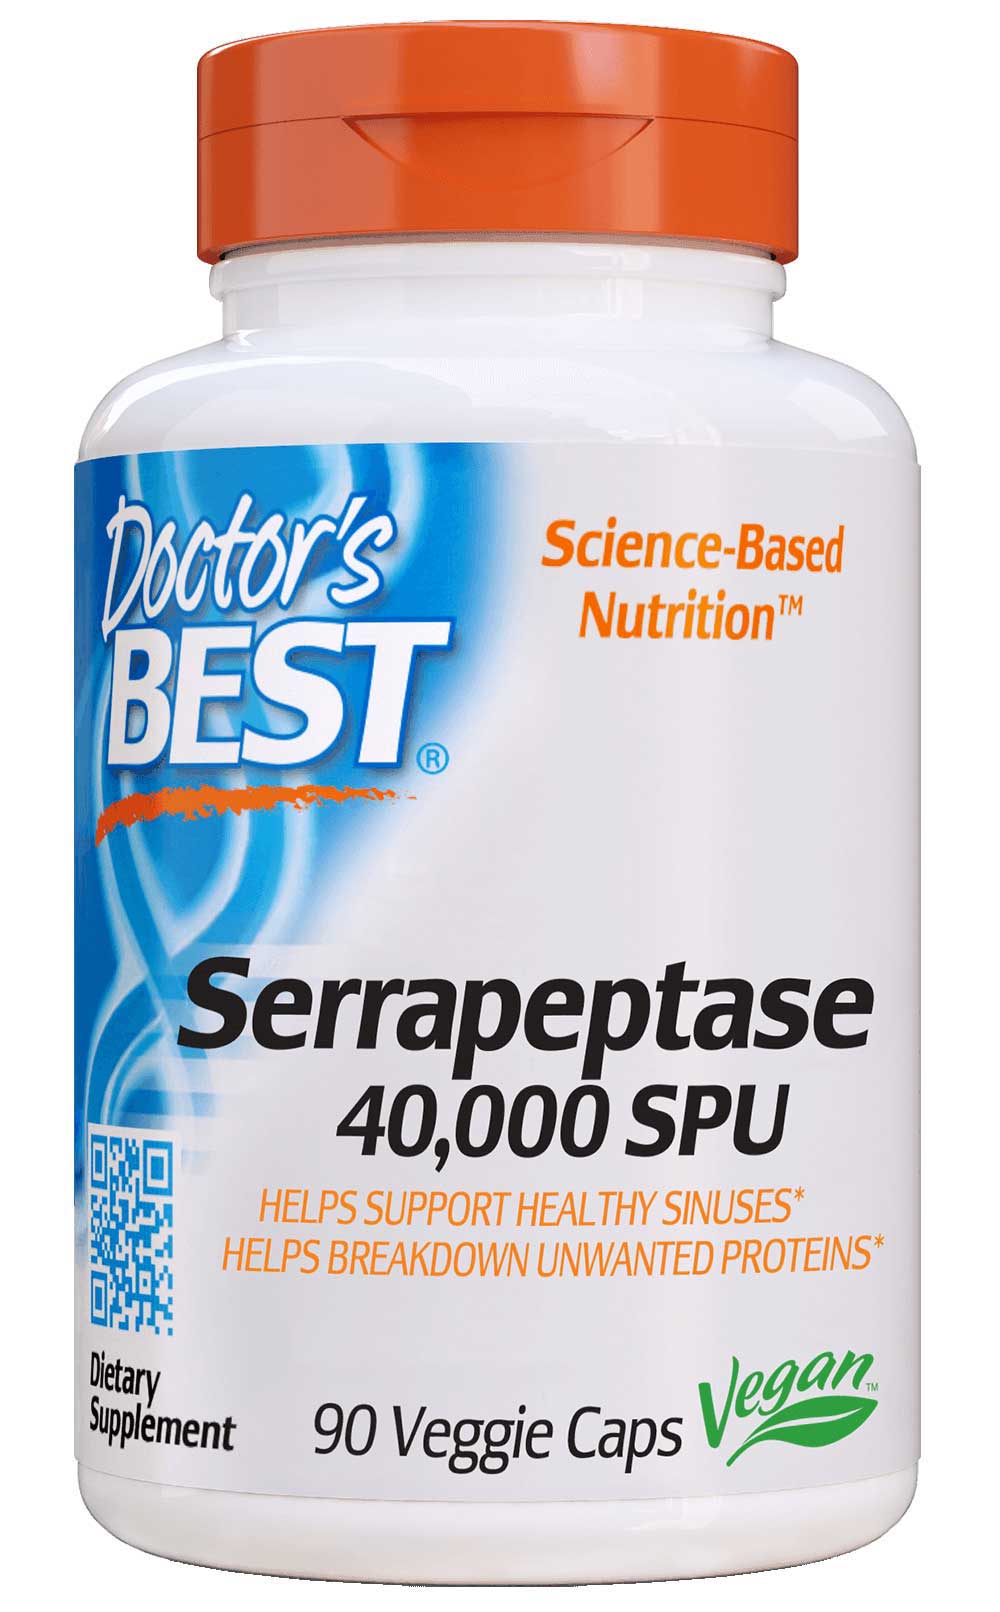 Doctor's Best Serrapeptase 40,000 SPU